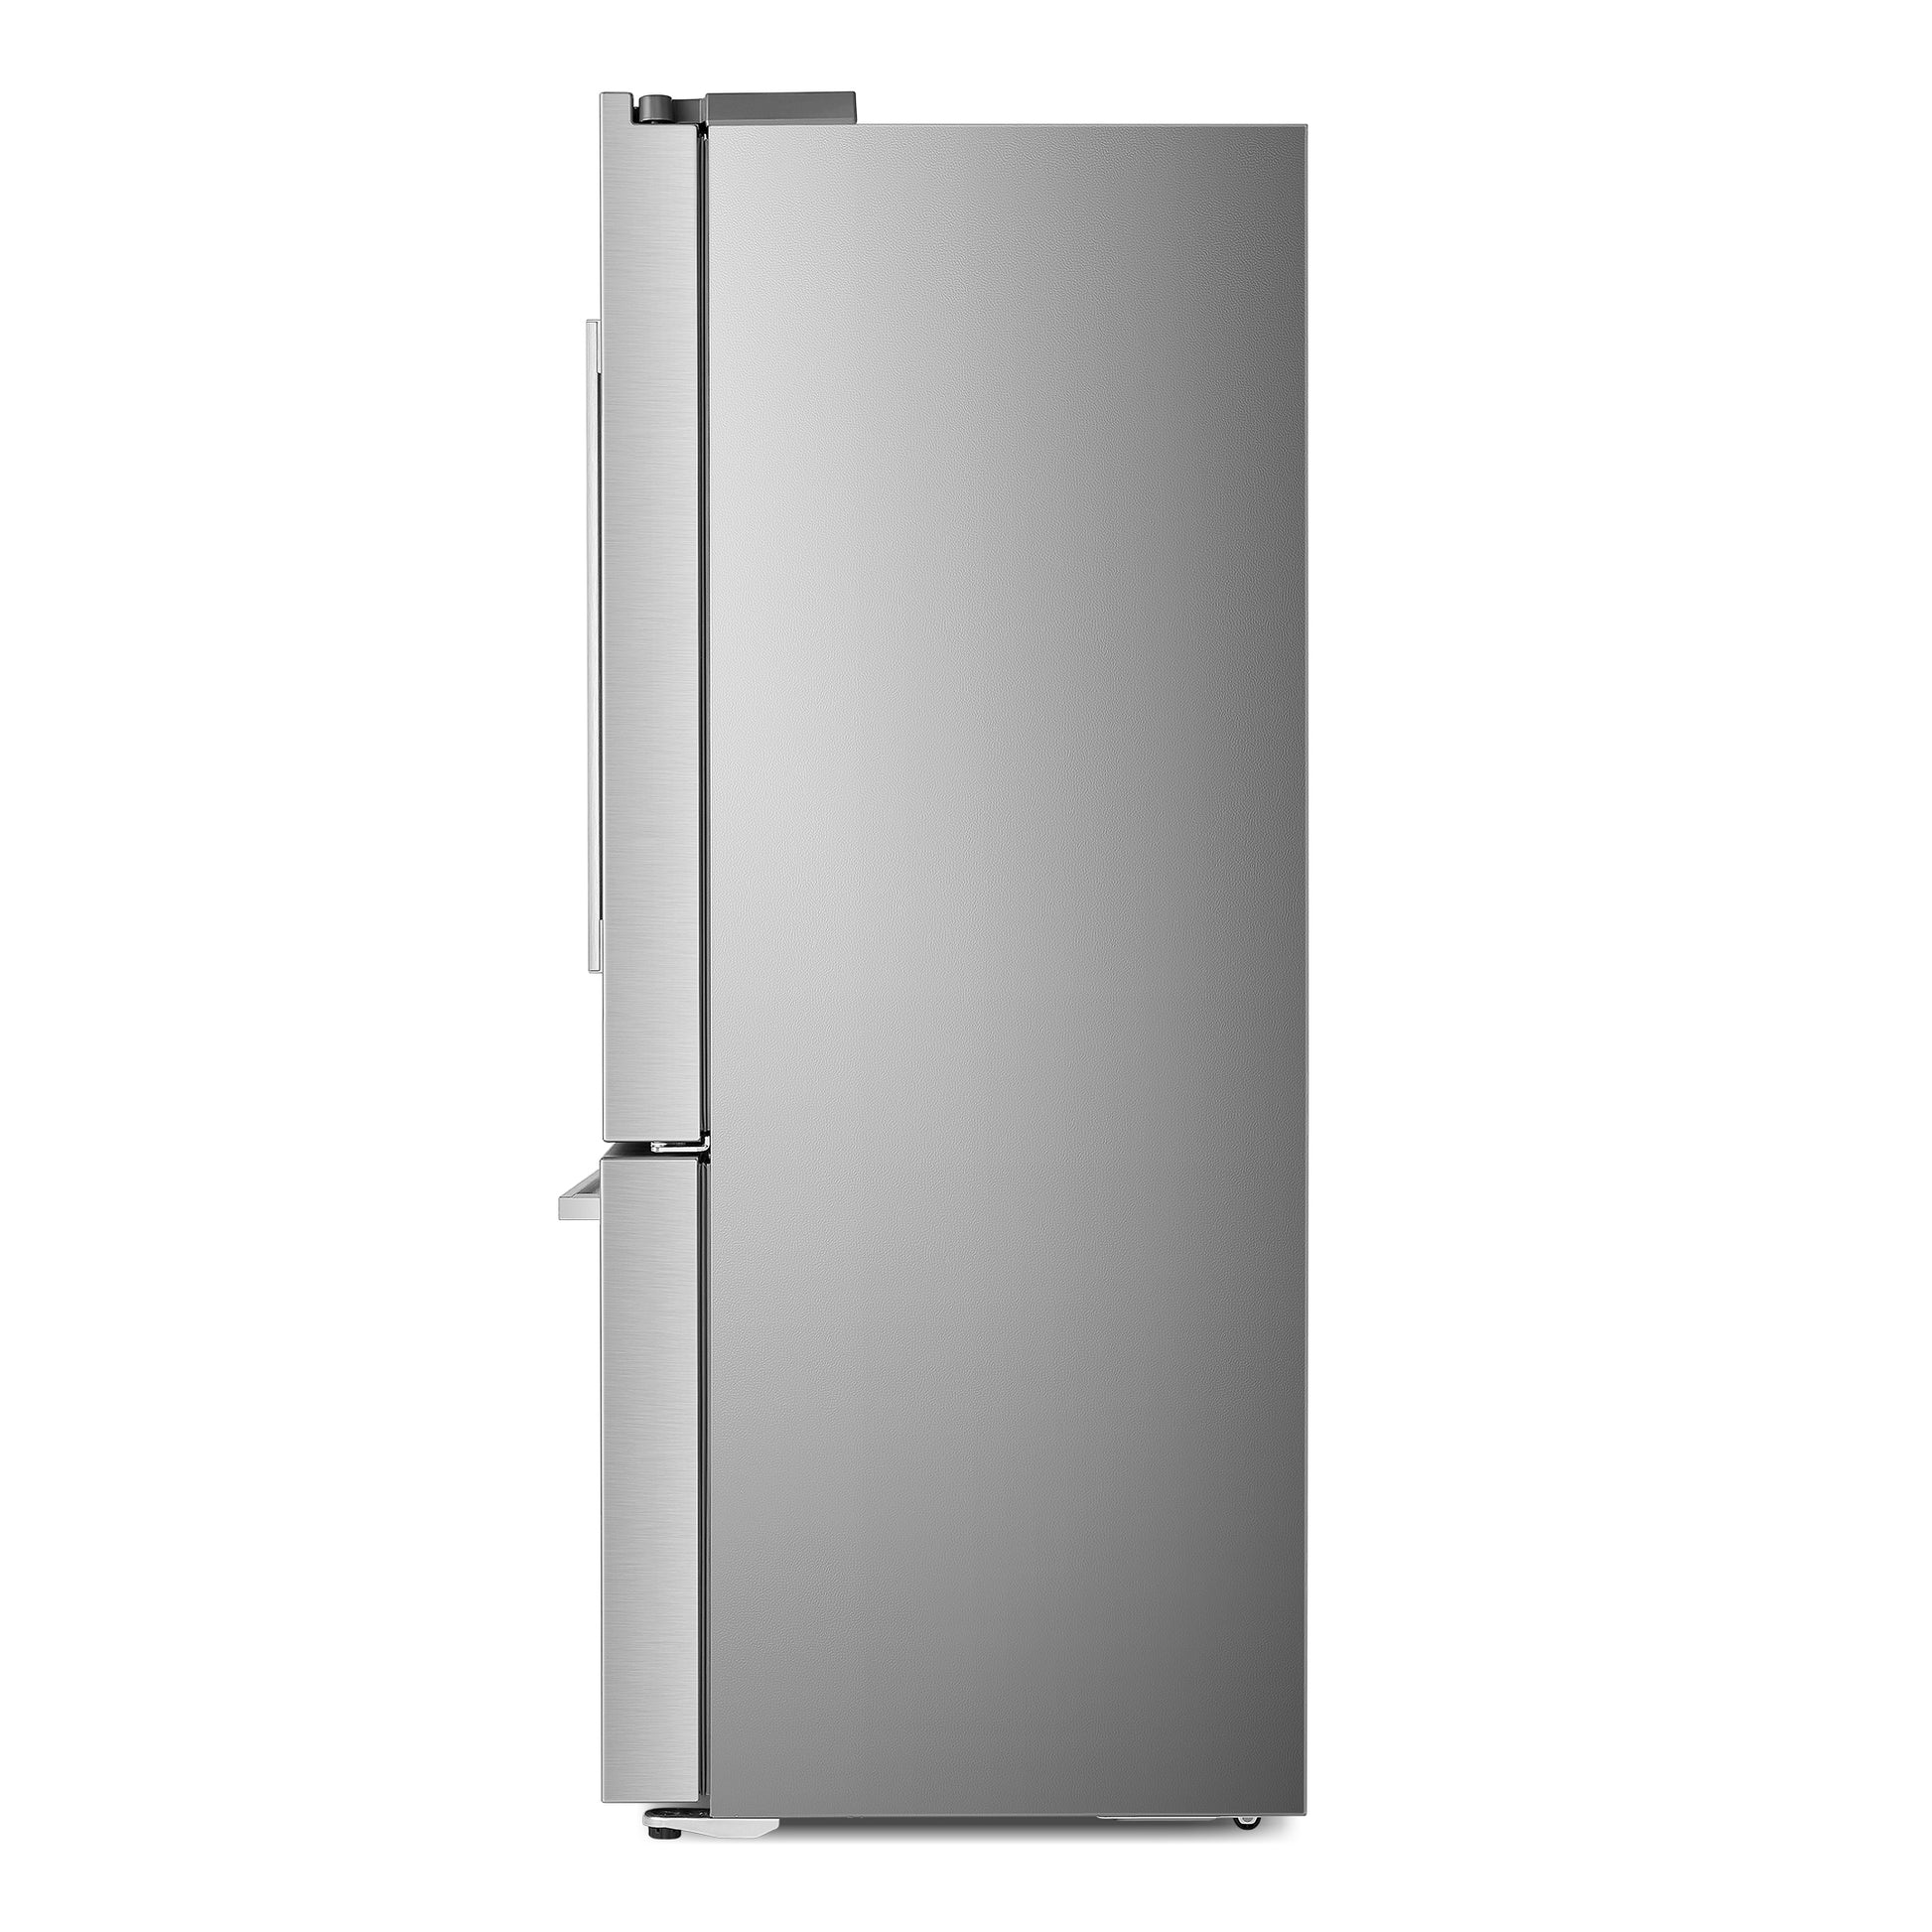 Cosmo 22.4 cu. ft. 3-Door French Door Refrigerator with Water Dispenser and Ice Maker in Stainless Steel